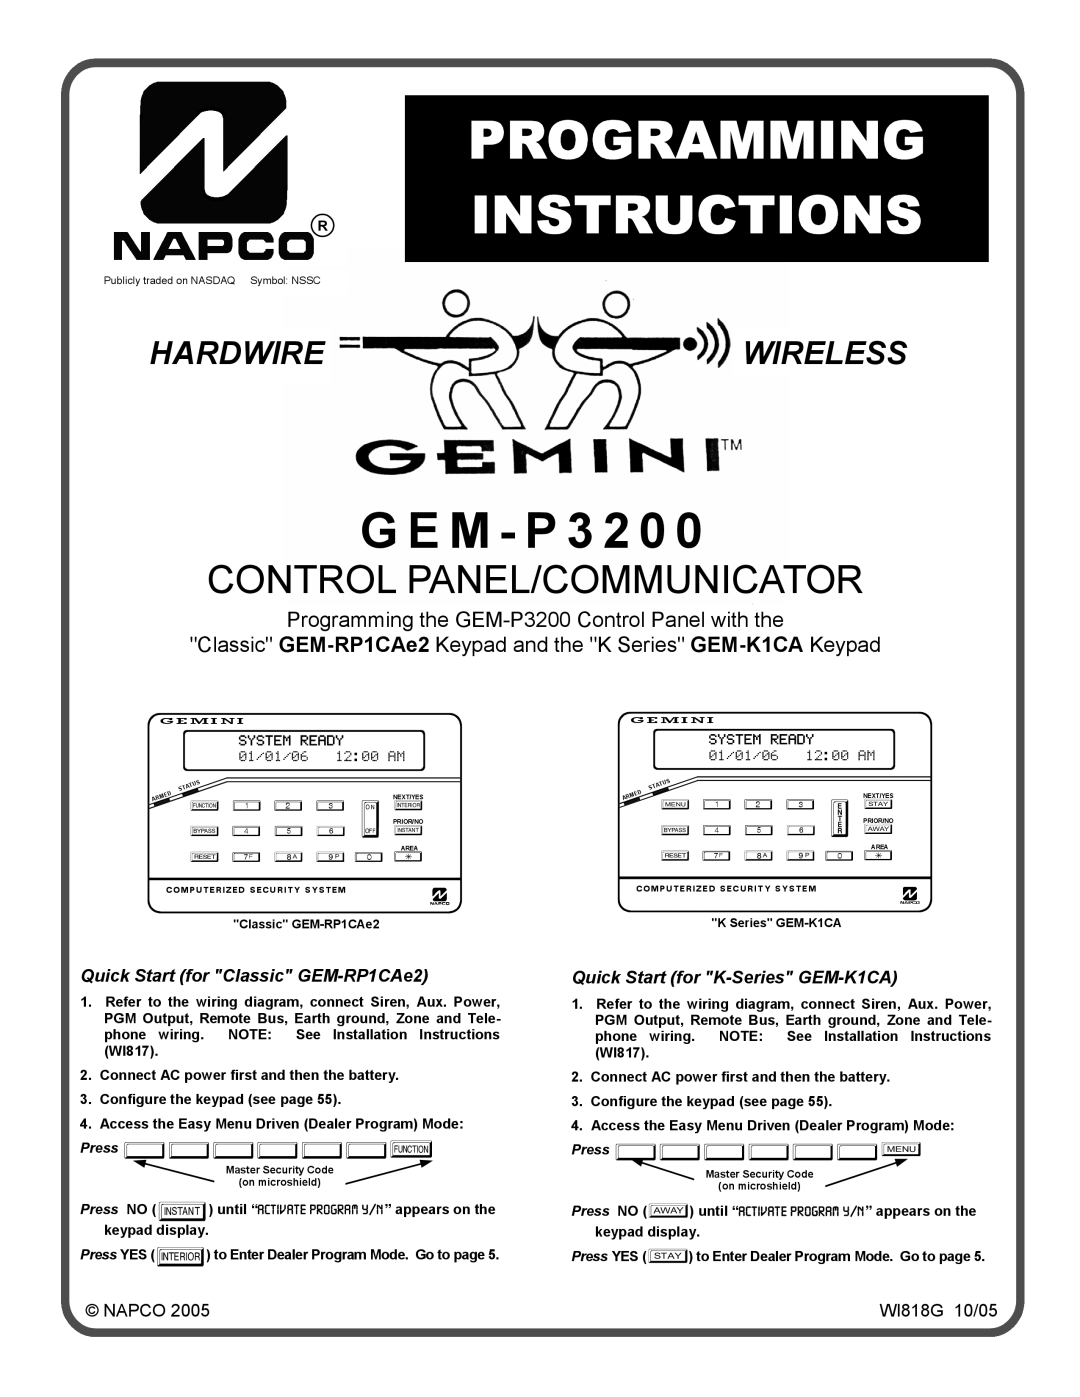 Napco Security Technologies GEM-P3200 quick start Programming Instructions, G E M - P, Control Panel/Communicator, Gemini 